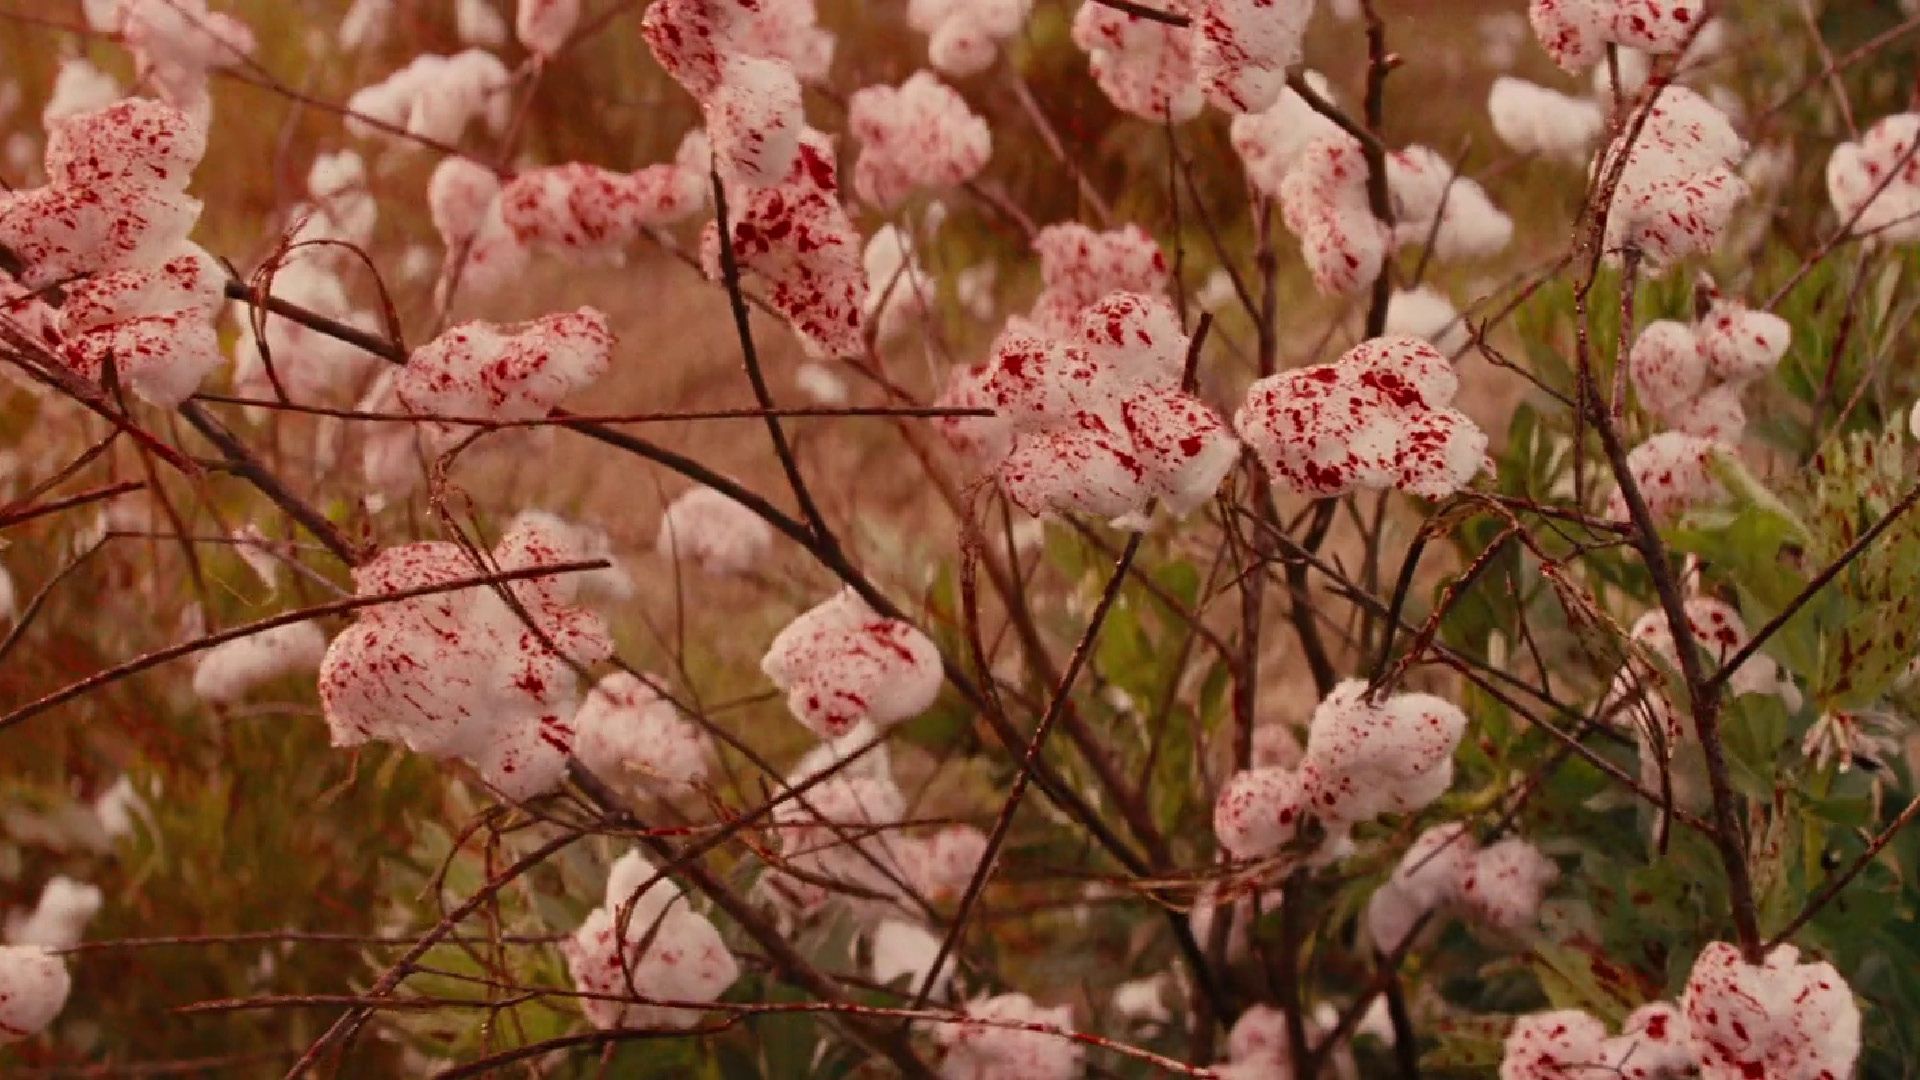 DJANGO UNCHAINED film still of a cotton field